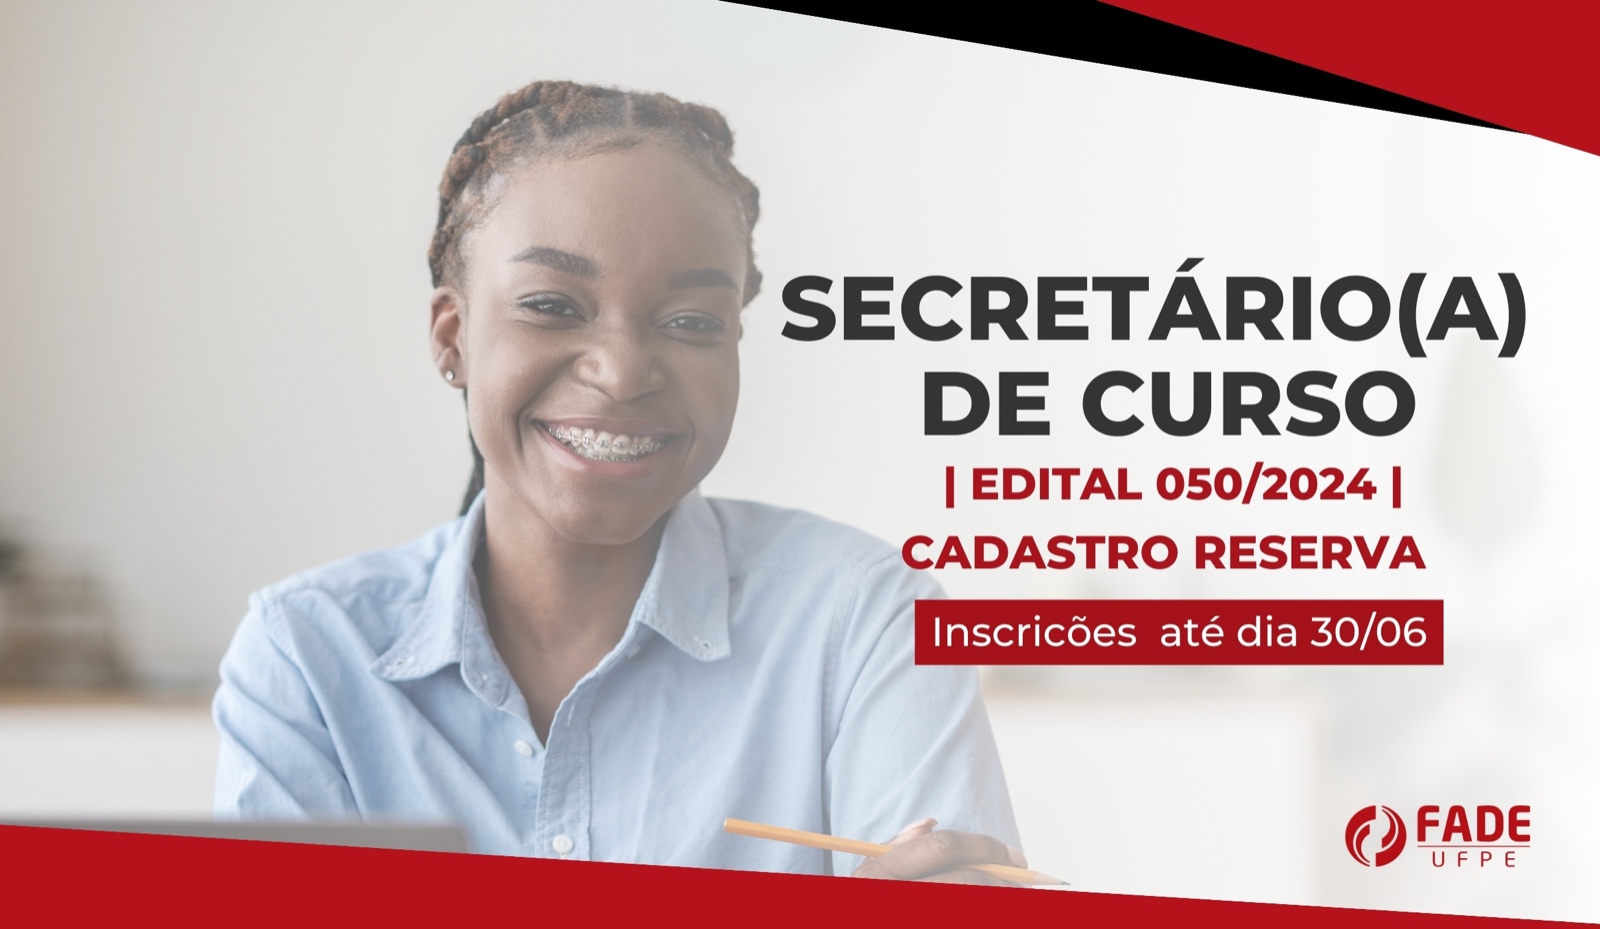 Secretário(a) de Curso |Cadastro Reserva | Edital 050/2024 | Fade-UFPE